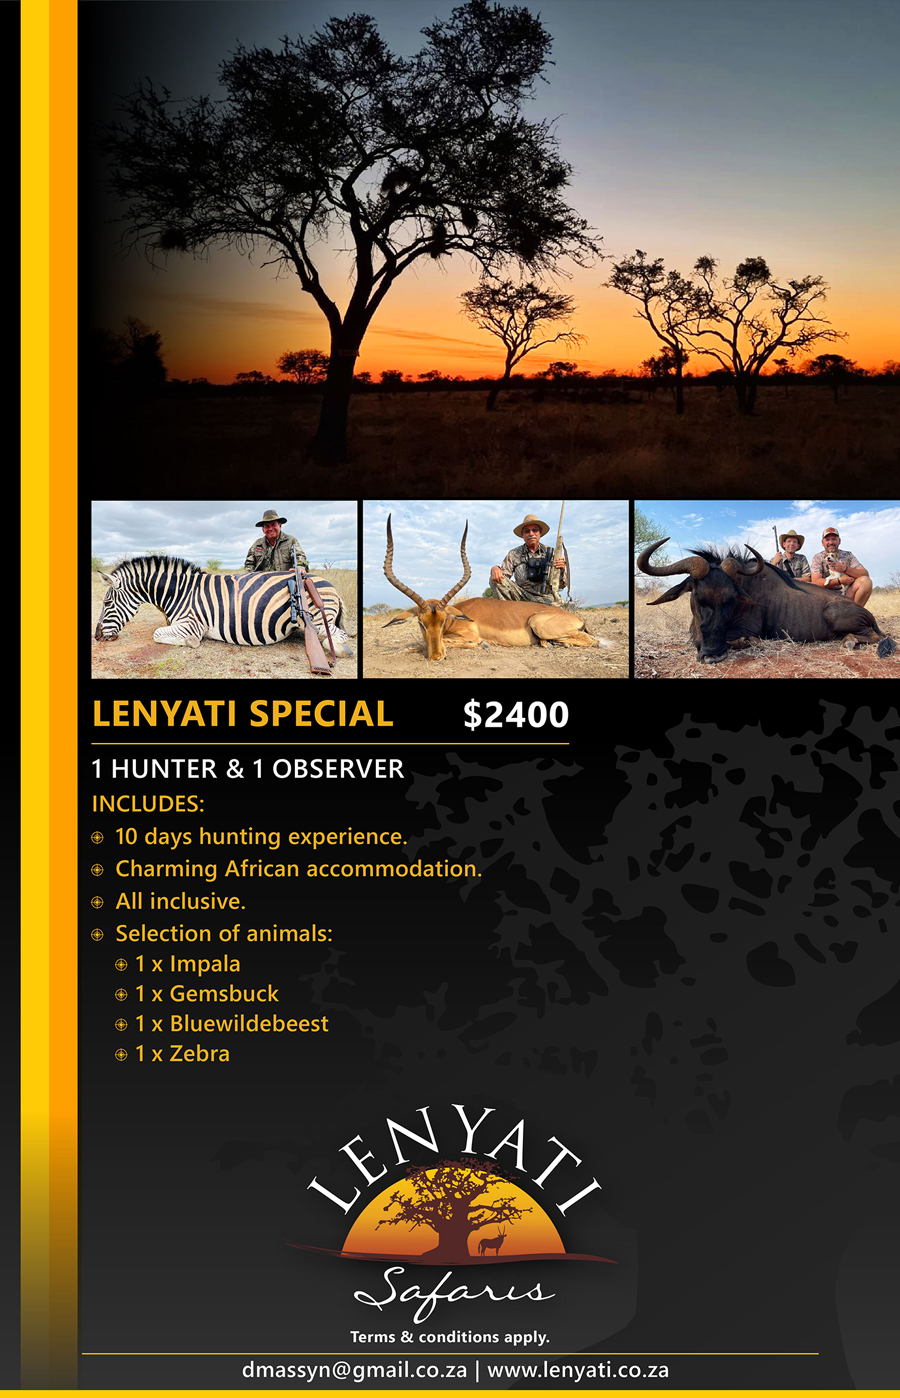 lenyati-safaris-lenyati-special